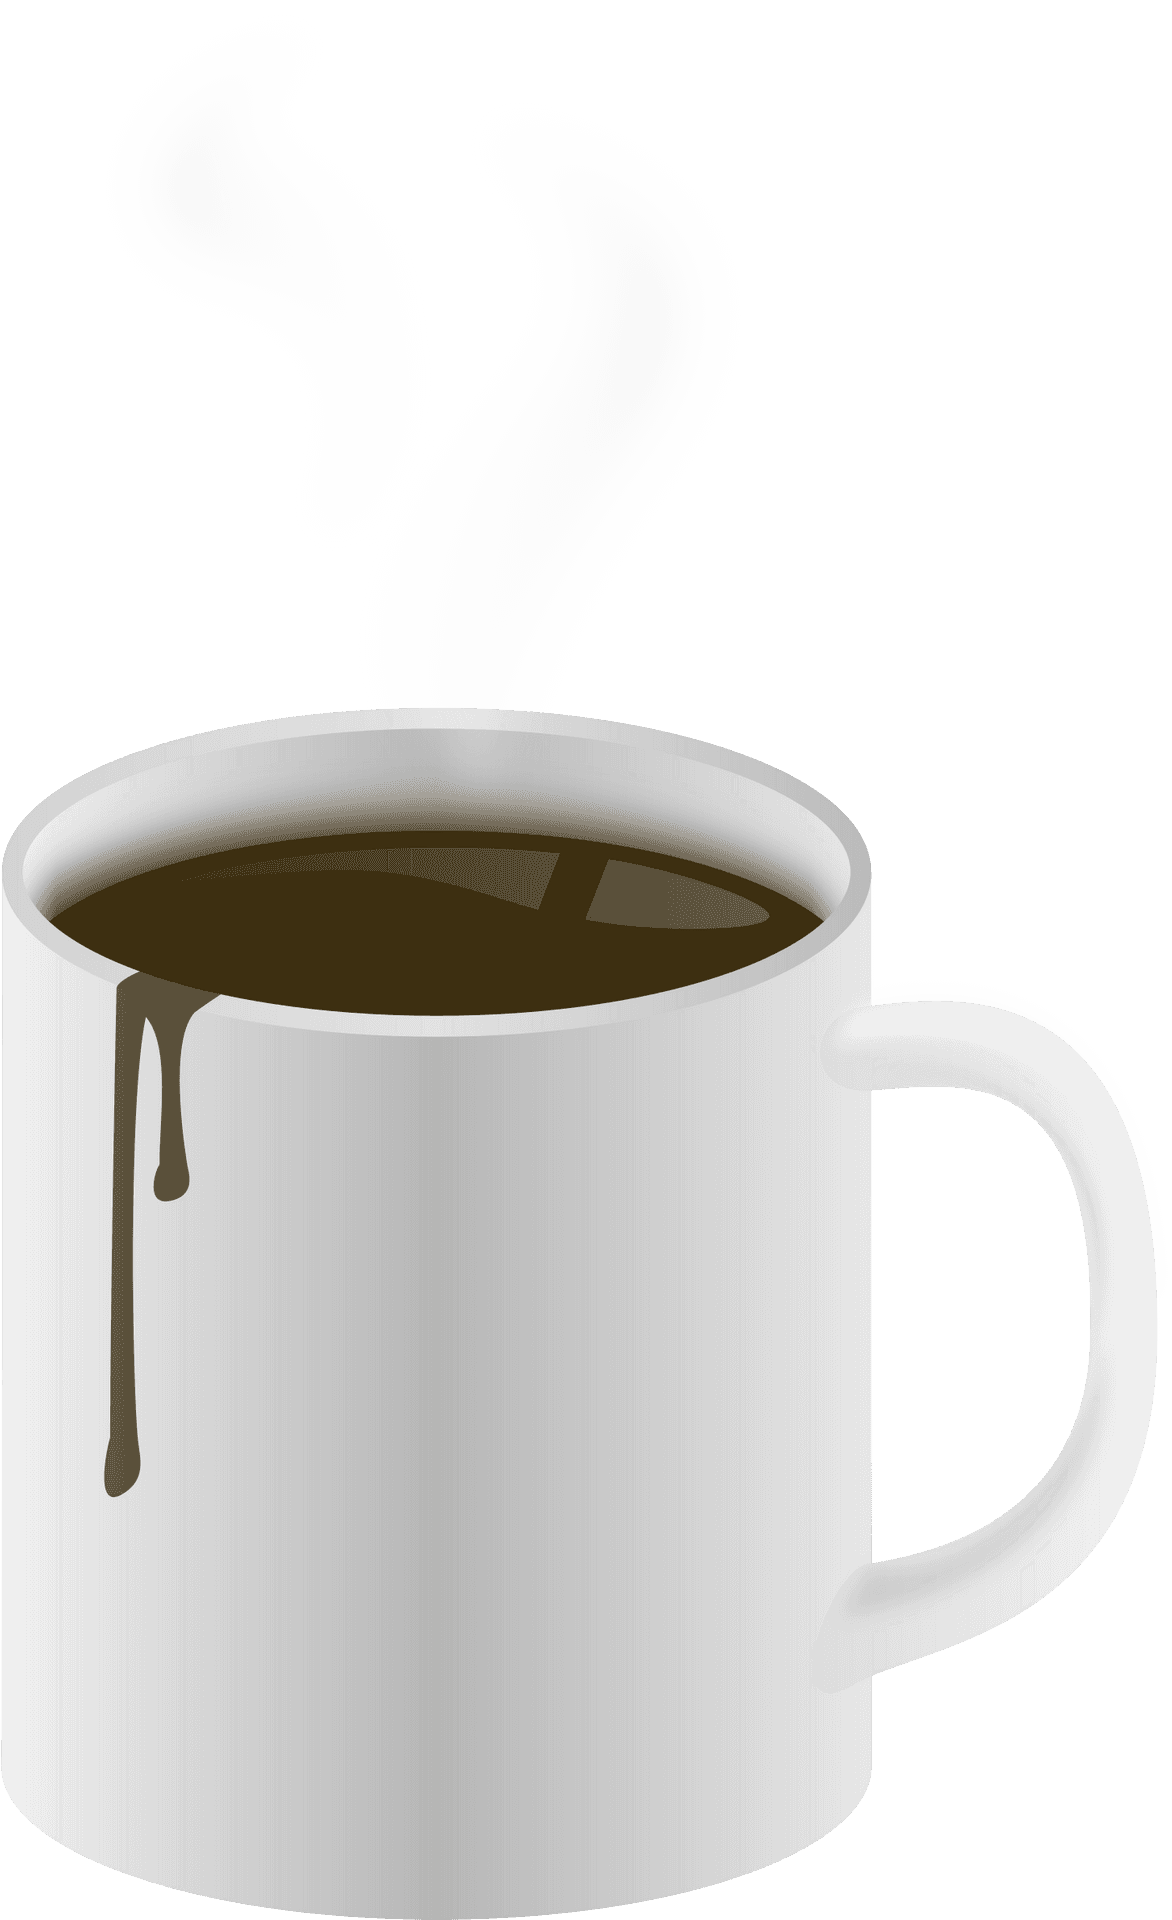 Steaming Coffee Mug Vector PNG image